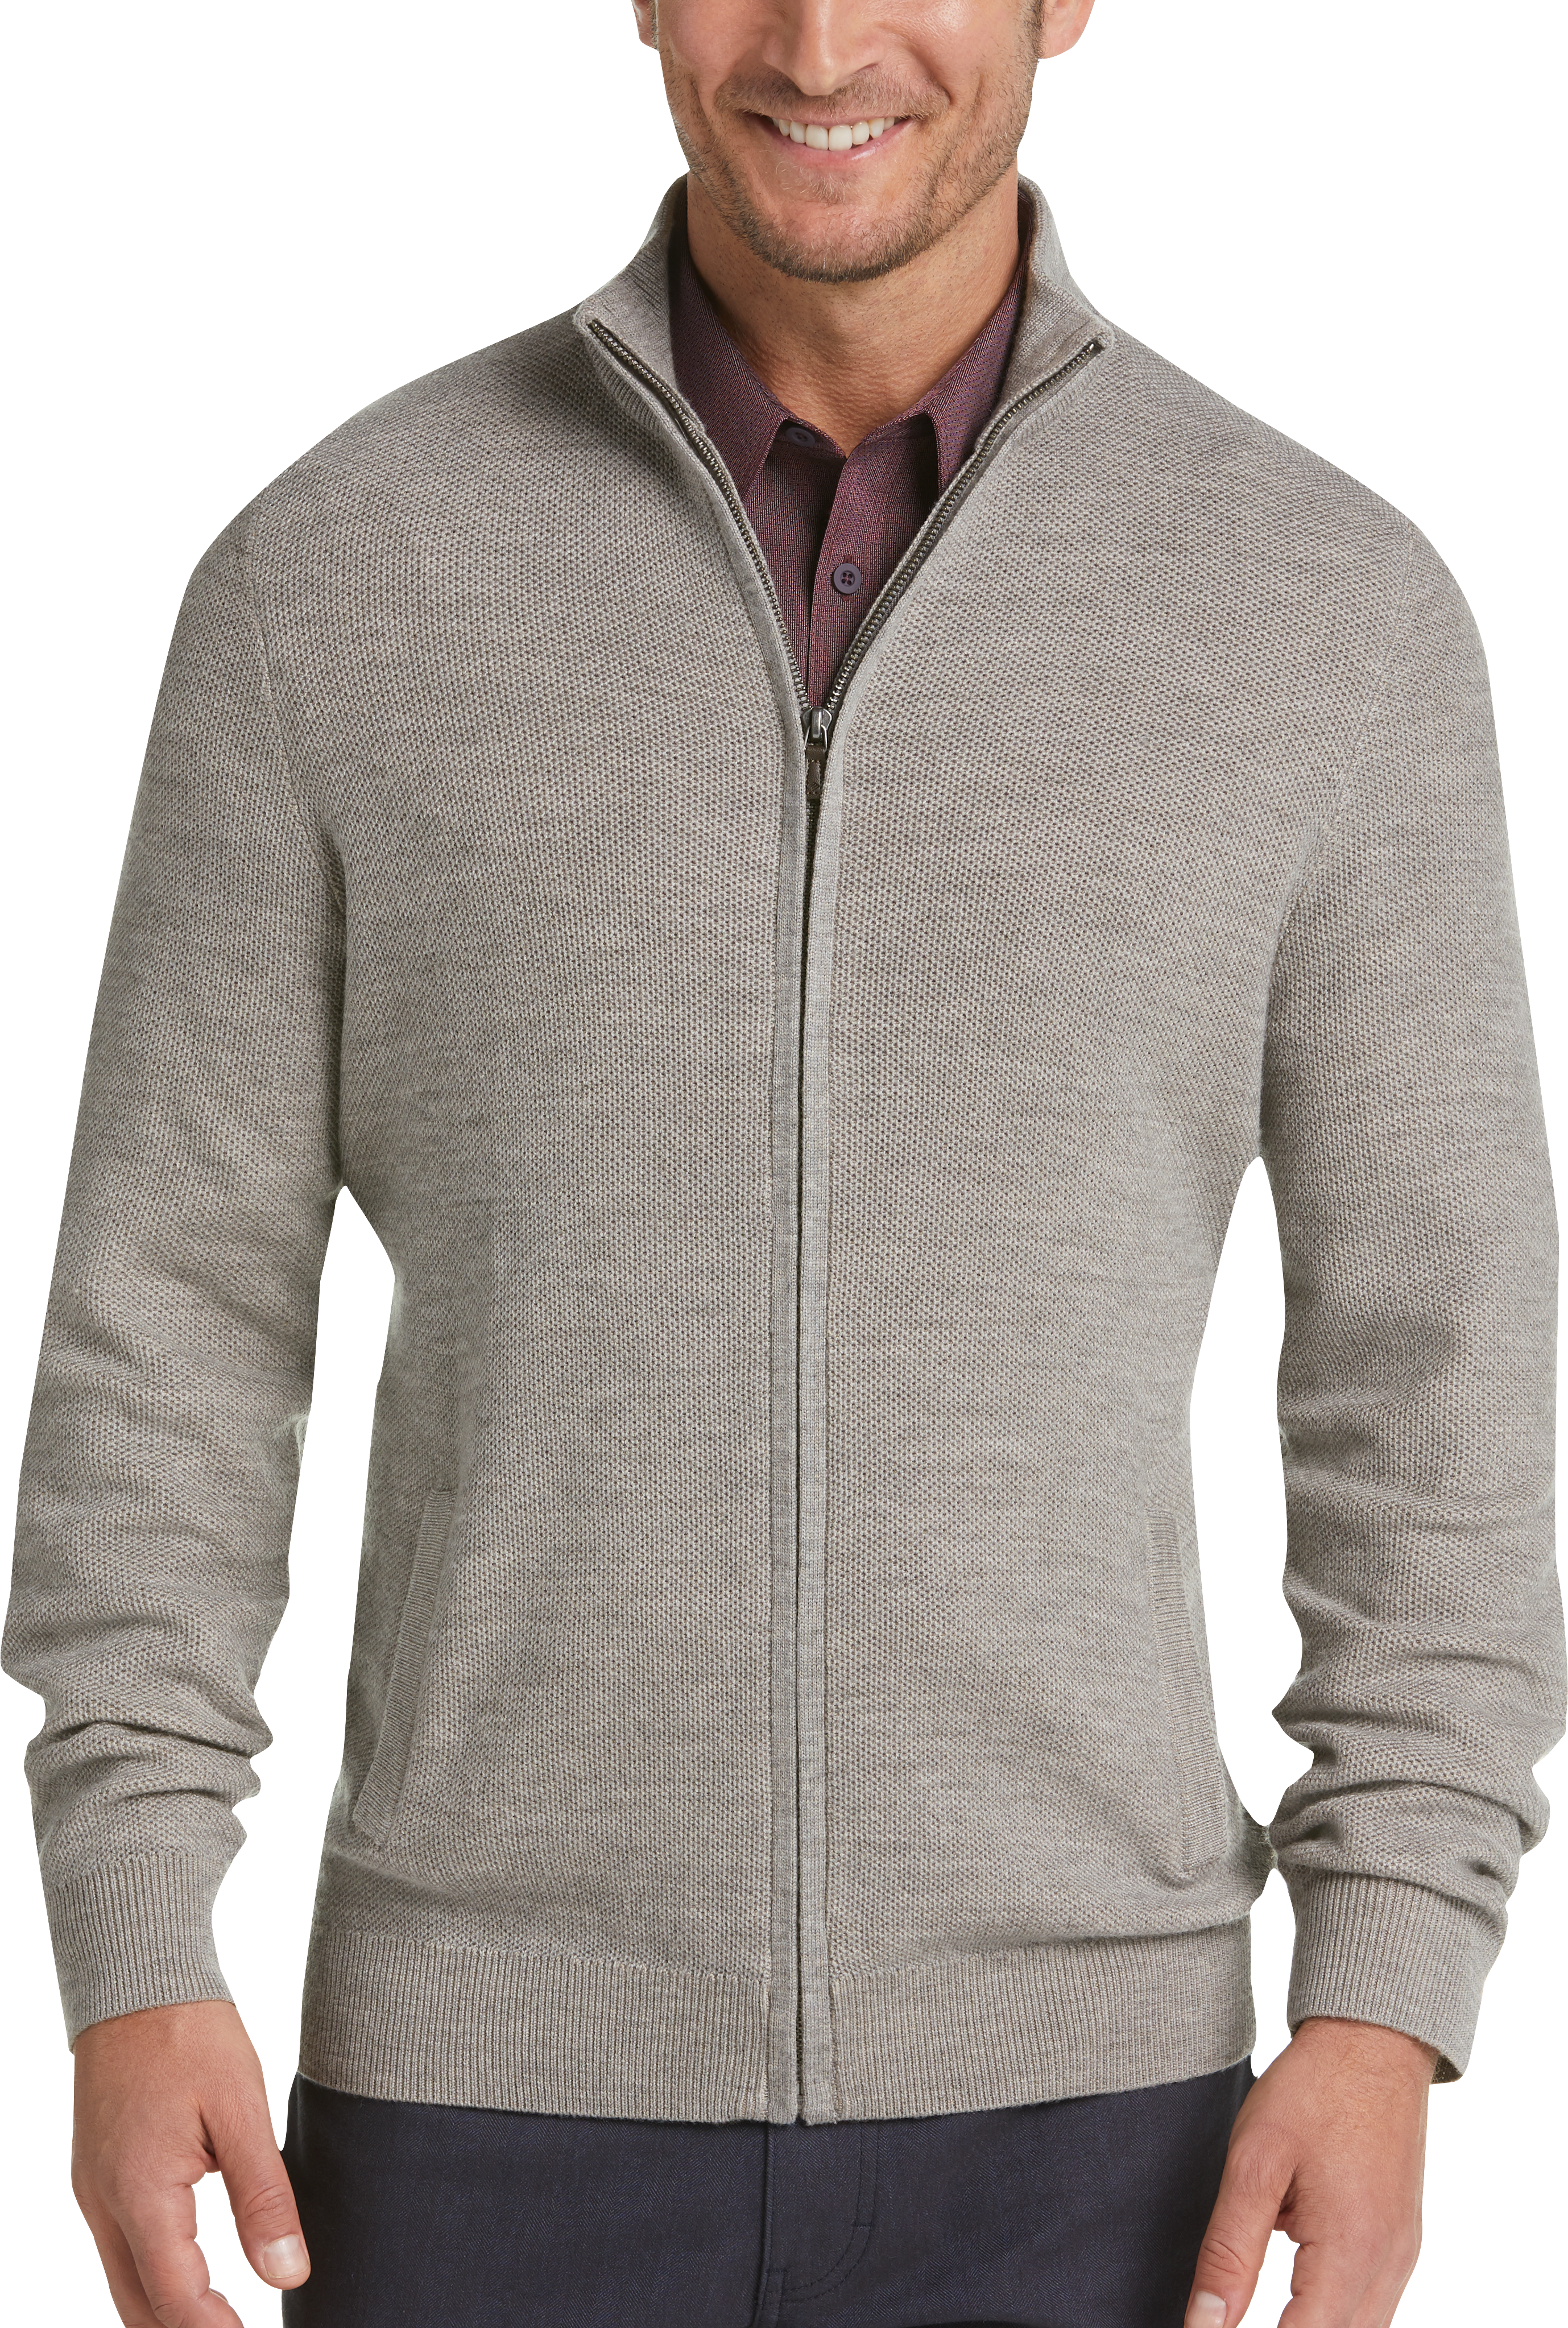 Joseph Abboud Light Gray Full-Zip Sweater - Men's Sale | Men's Wearhouse